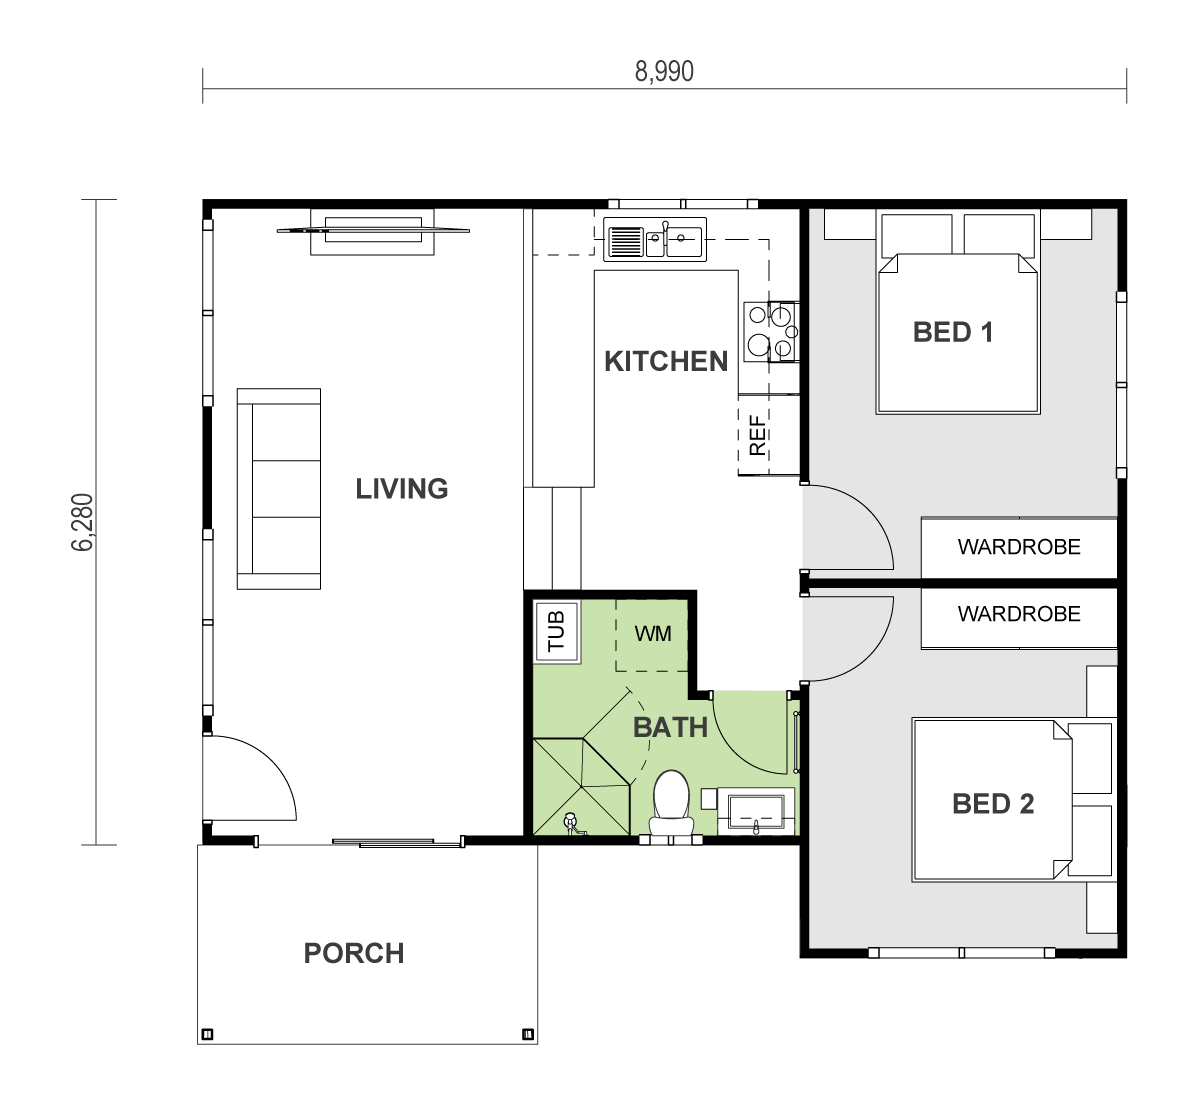 granny flat with porch floor plan design